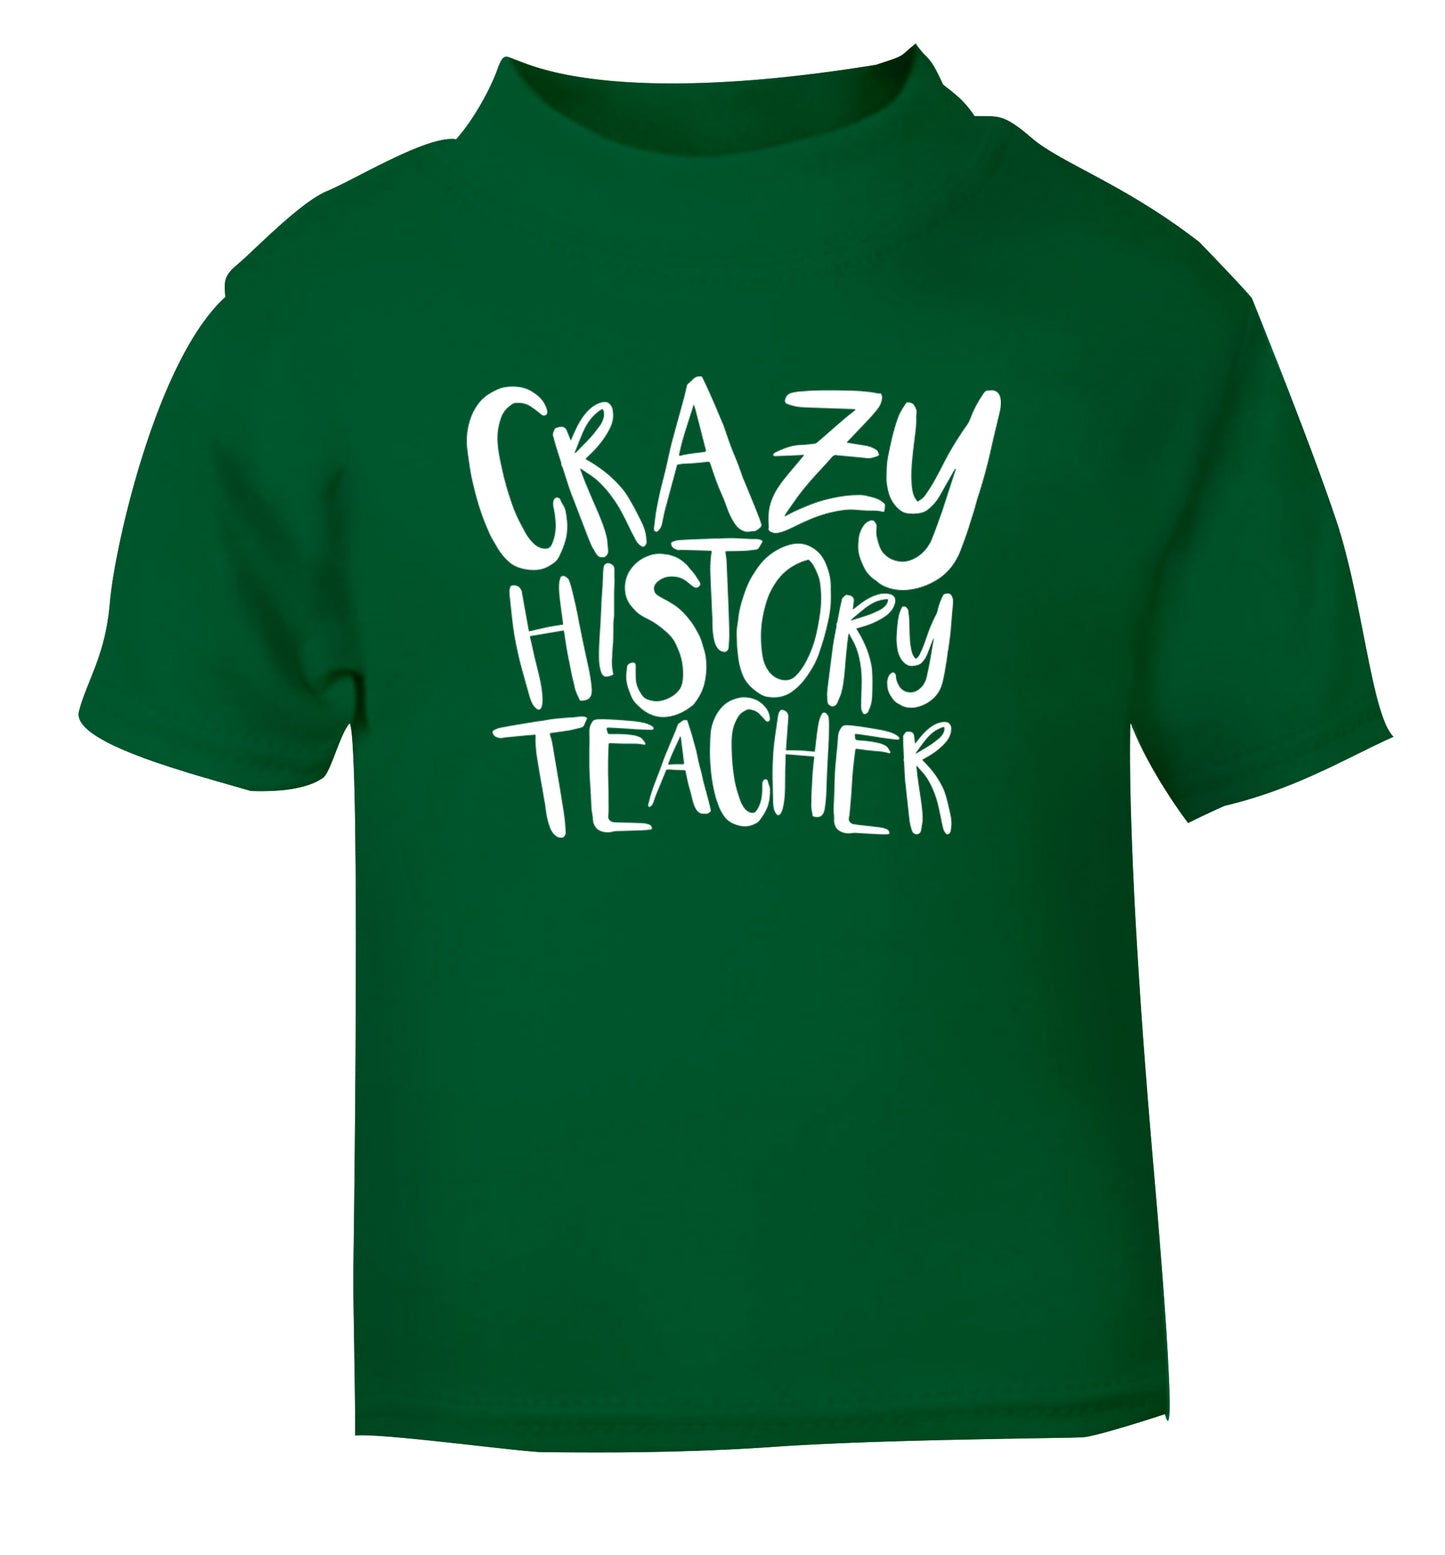 Crazy history teacher green Baby Toddler Tshirt 2 Years